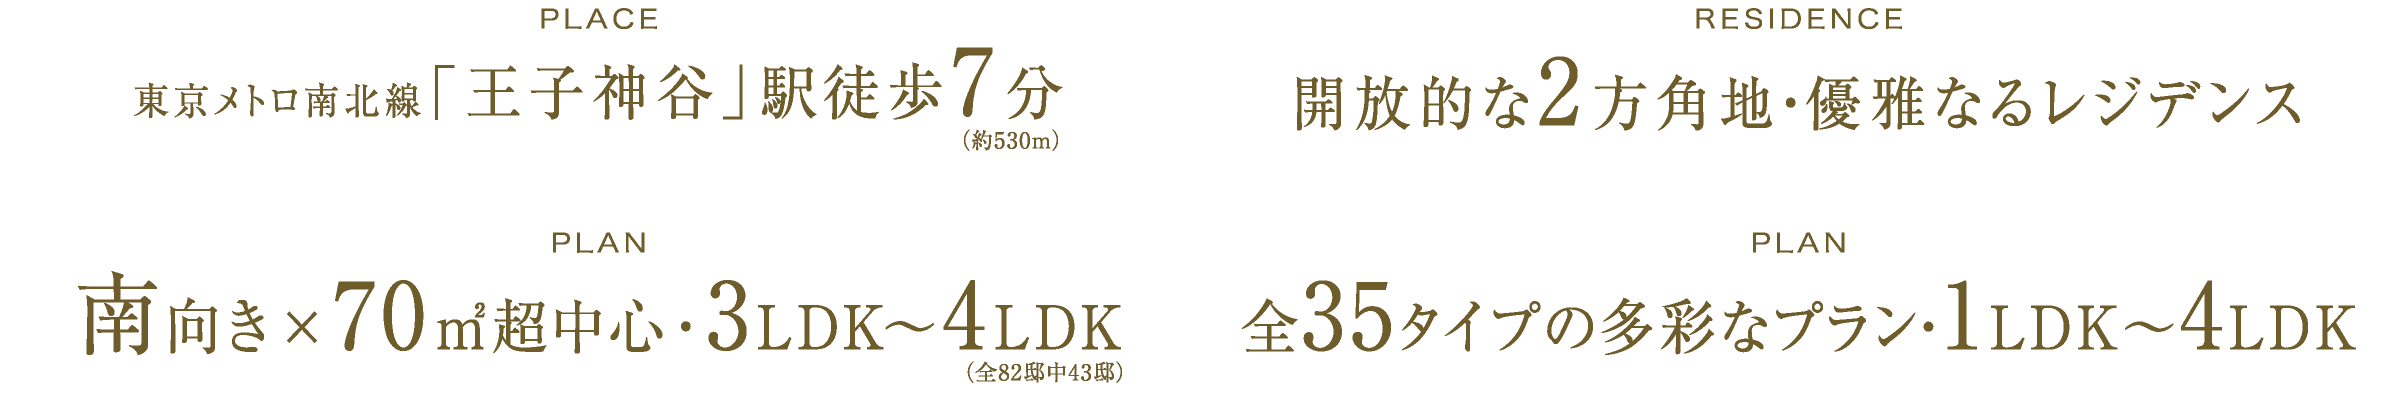 PLACE：東京メトロ南北線「王子神谷」駅徒歩7分｜RESIDENCE：開放的な2方角地・優雅なるレジデンス｜PLAN：南向き×70㎡超中心・3LDK〜4LDK｜PLAN：全35タイプの多彩なプラン・1LDK〜4LDK